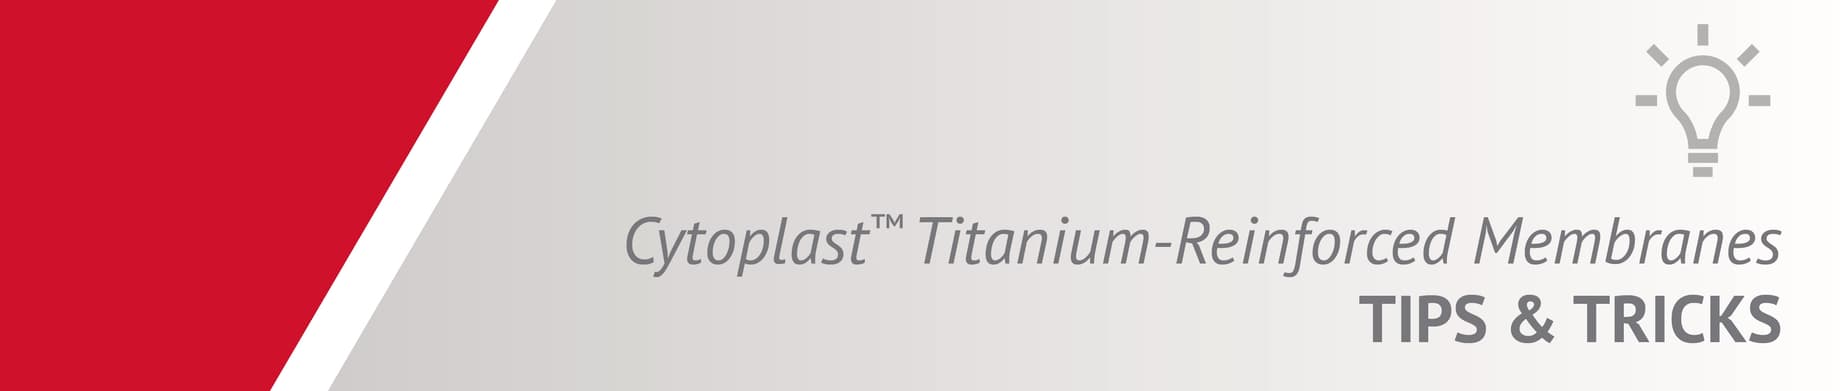 TT Ti Cytoplast titanium-reinforced dPTFE dental membrane for vertical ridge augmentation and horizontal ridge augmentation